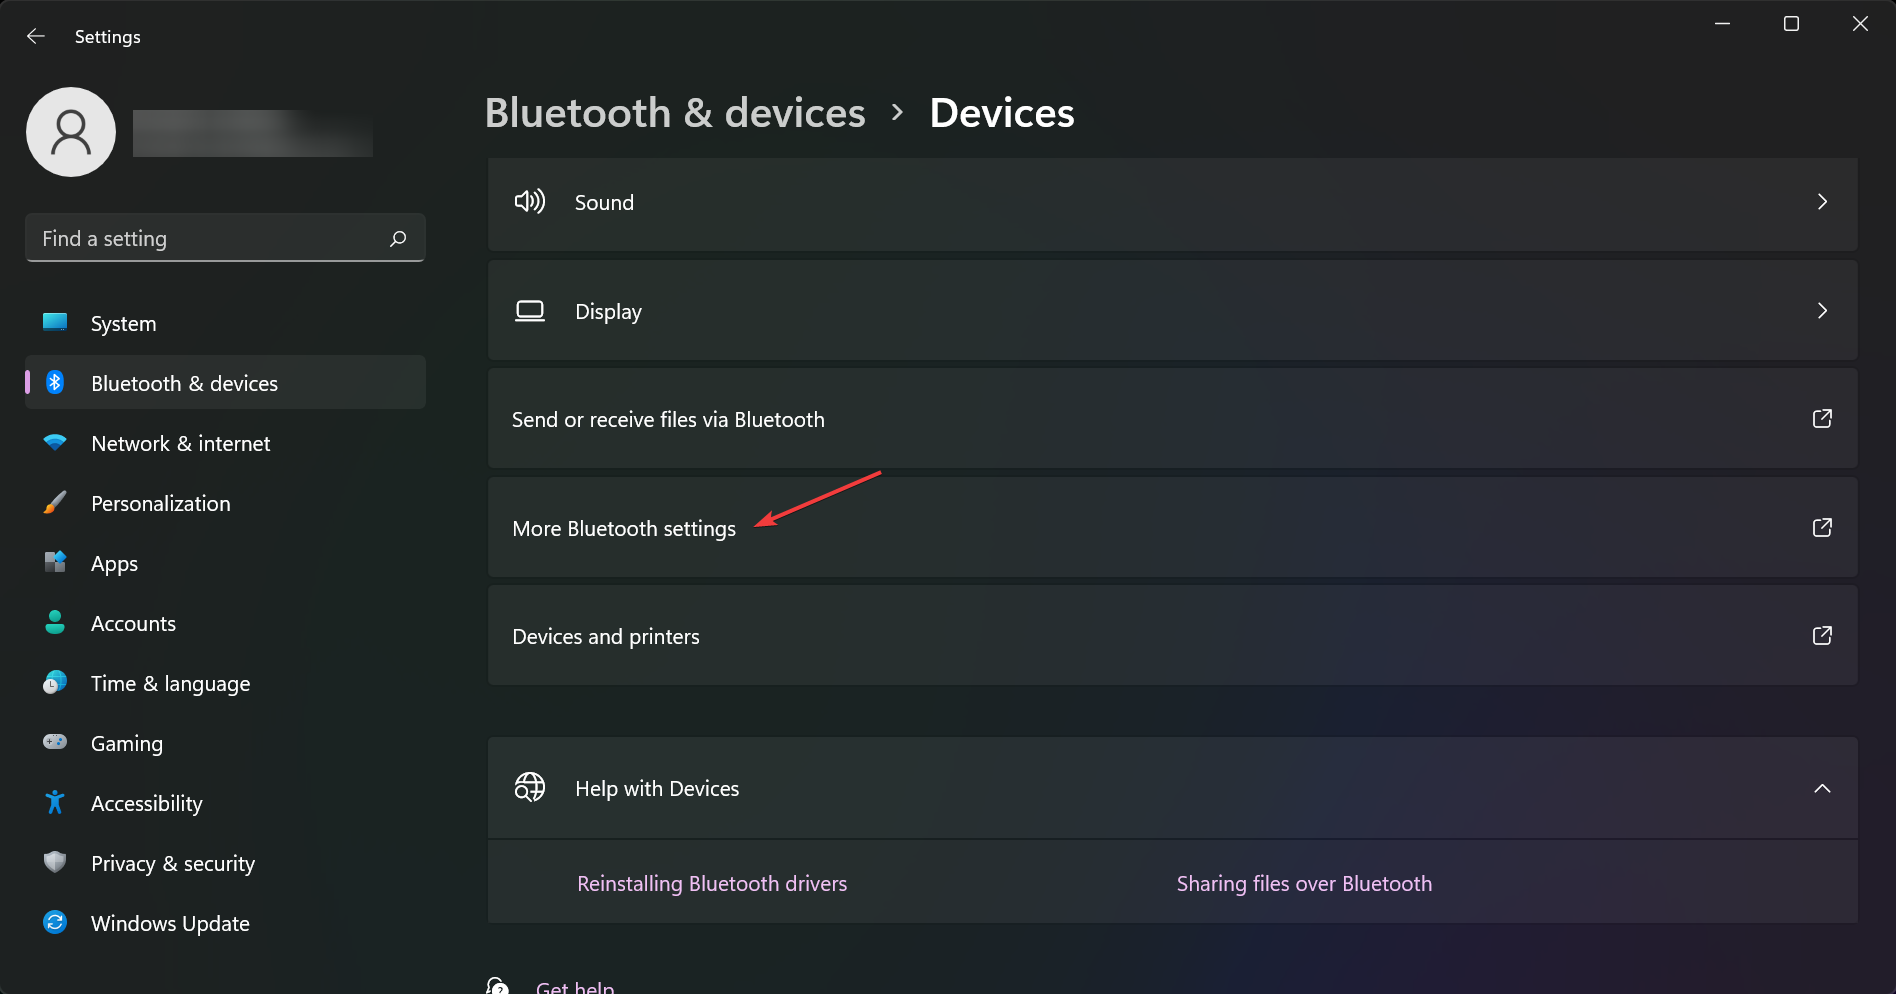 more Bluetooth settings